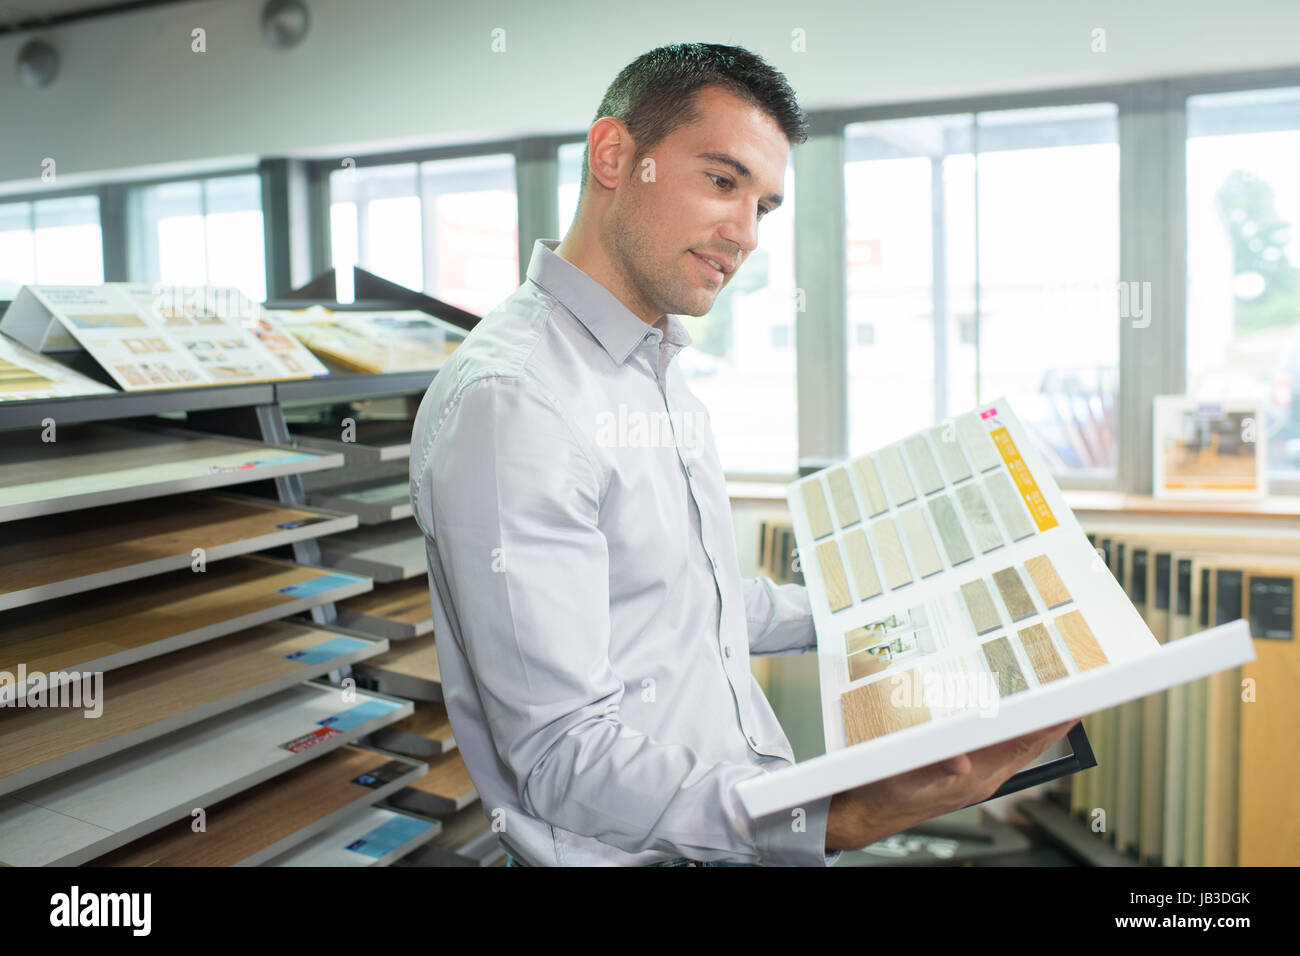 man choosing wood sample planning for home improvement Stock Photo